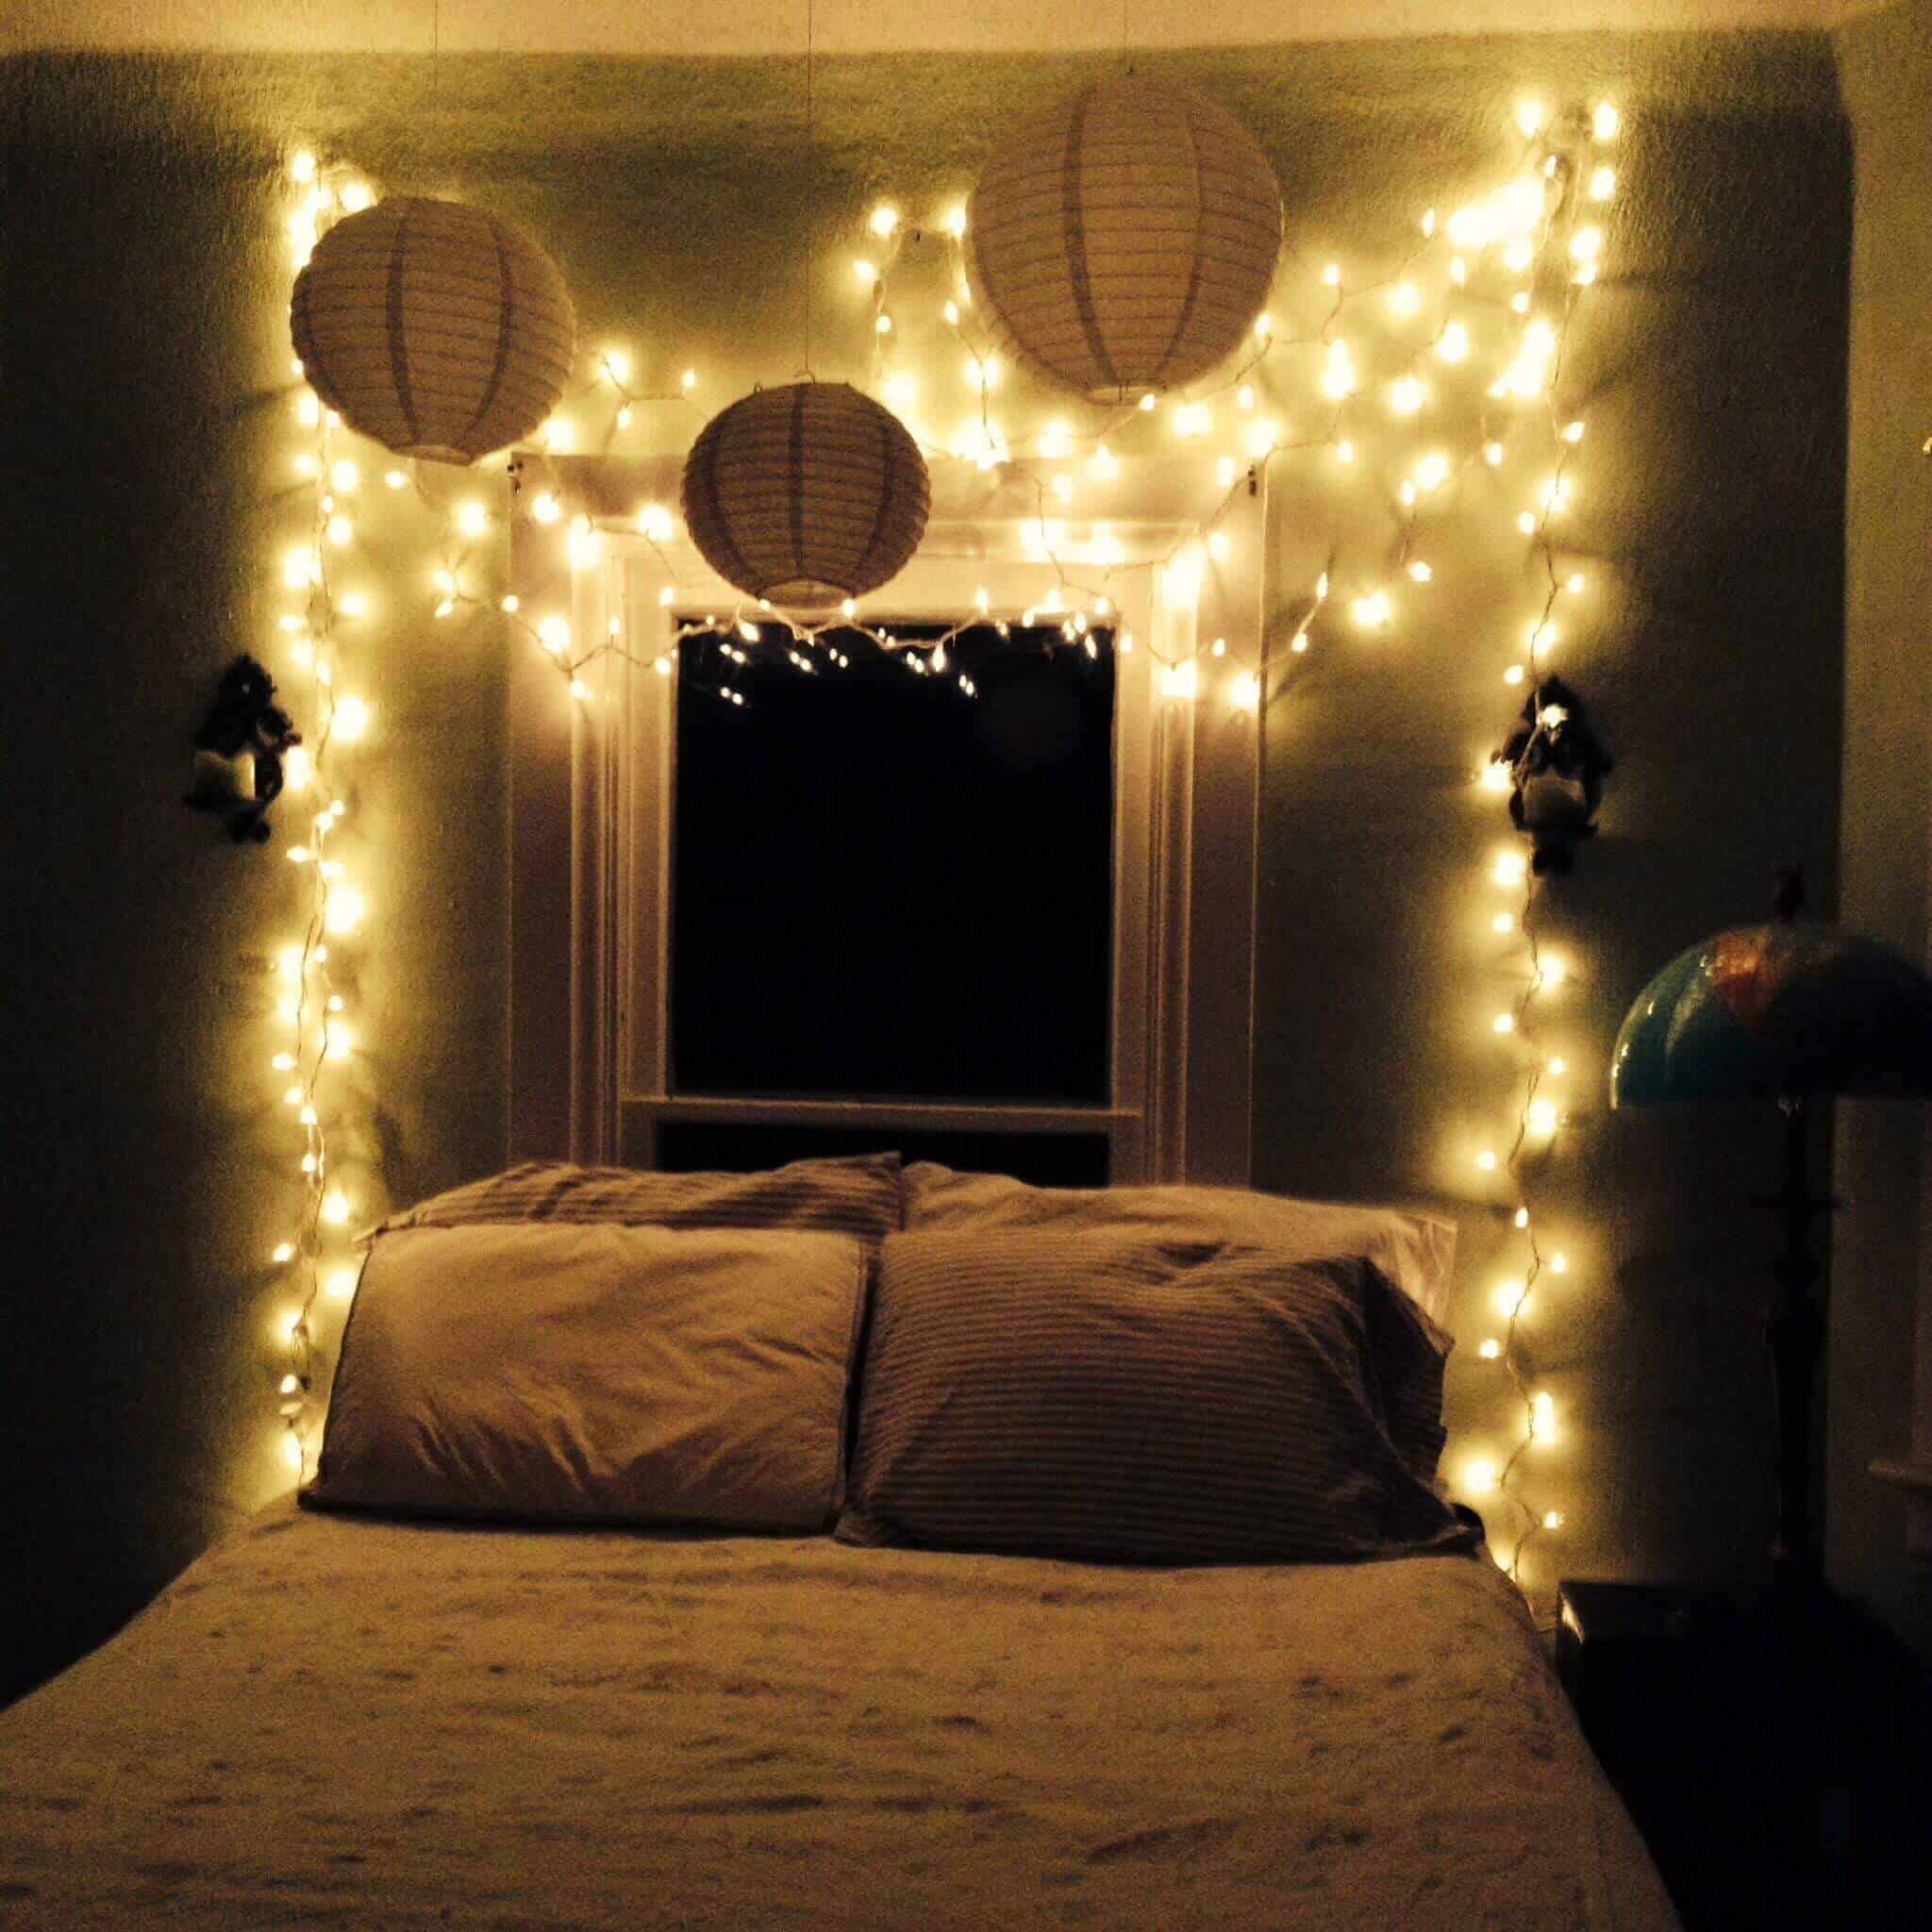 Bedroom Wall Lighting Ideas: Illuminate Your Home With Creativity